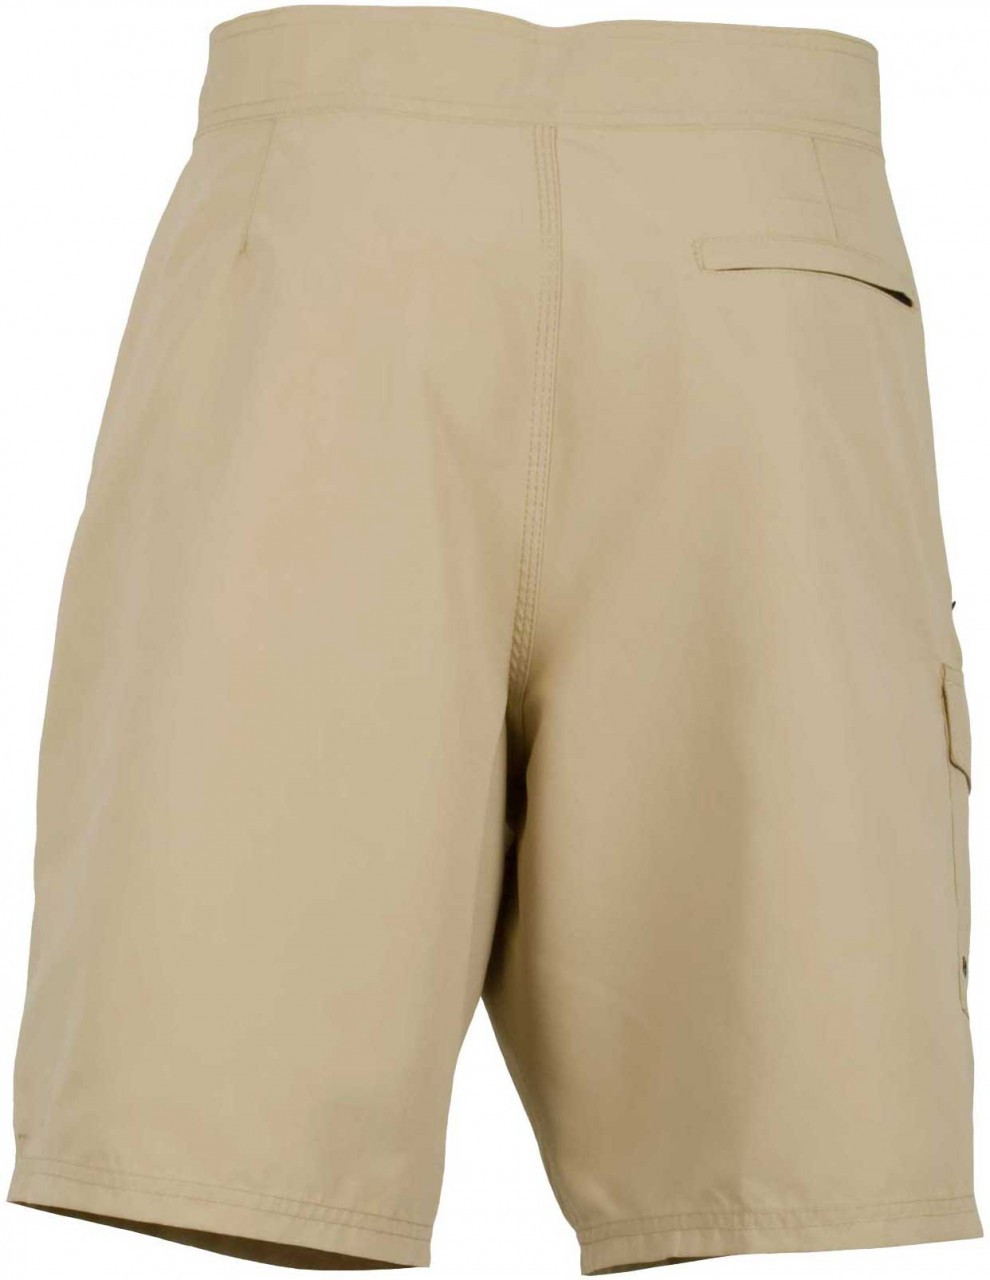 HUK K.C. Scott MARLIN Fishing BOARD SHORTS Men's Size 28 in GRAY *NEW W/  TAGS*